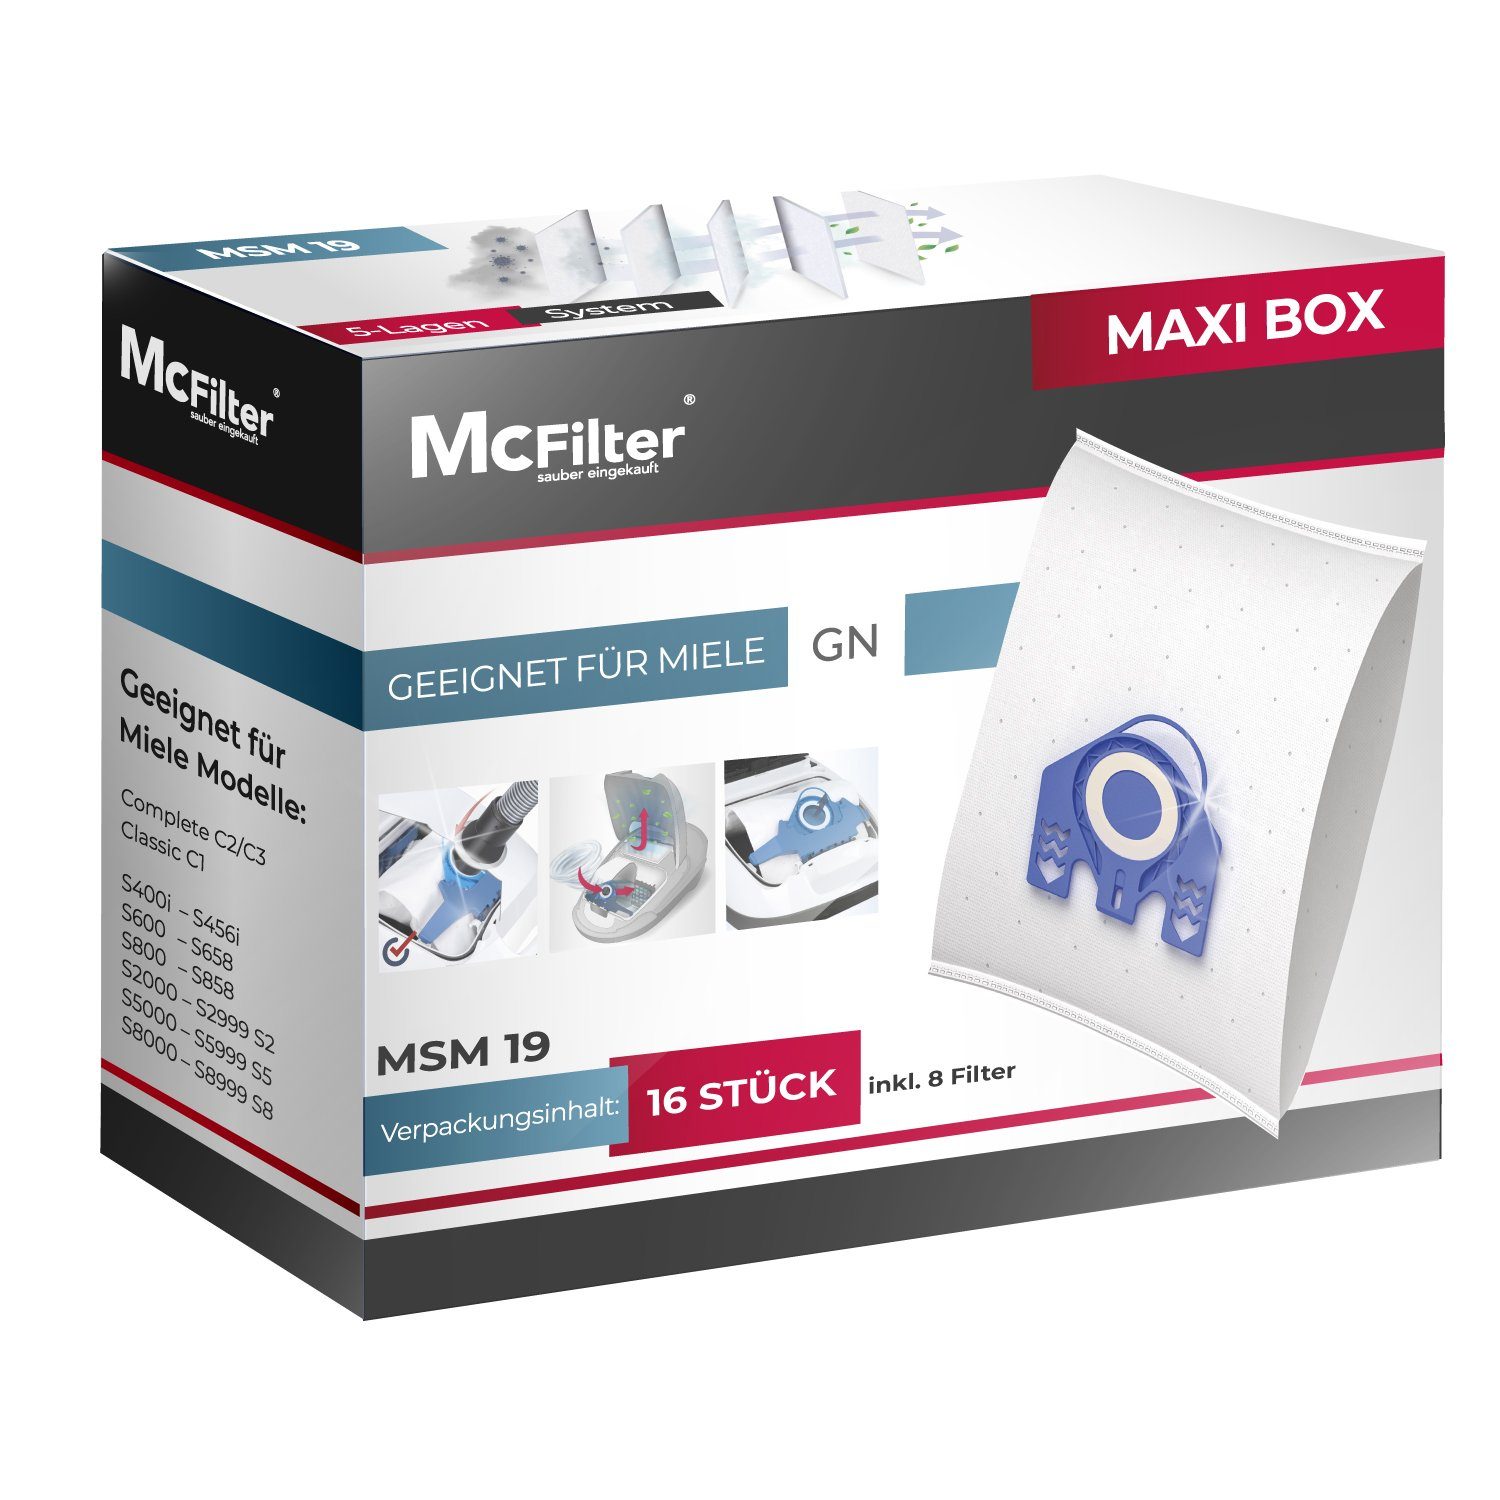 McFilter Staubsaugerbeutel >MAXI BOX< (16+8), passend für Miele Classic C1 Ecoline Serie Staubsauger, inkl. 8 Filter, 16 St., Top Alternative zu 9917730, wie Miele 10408410